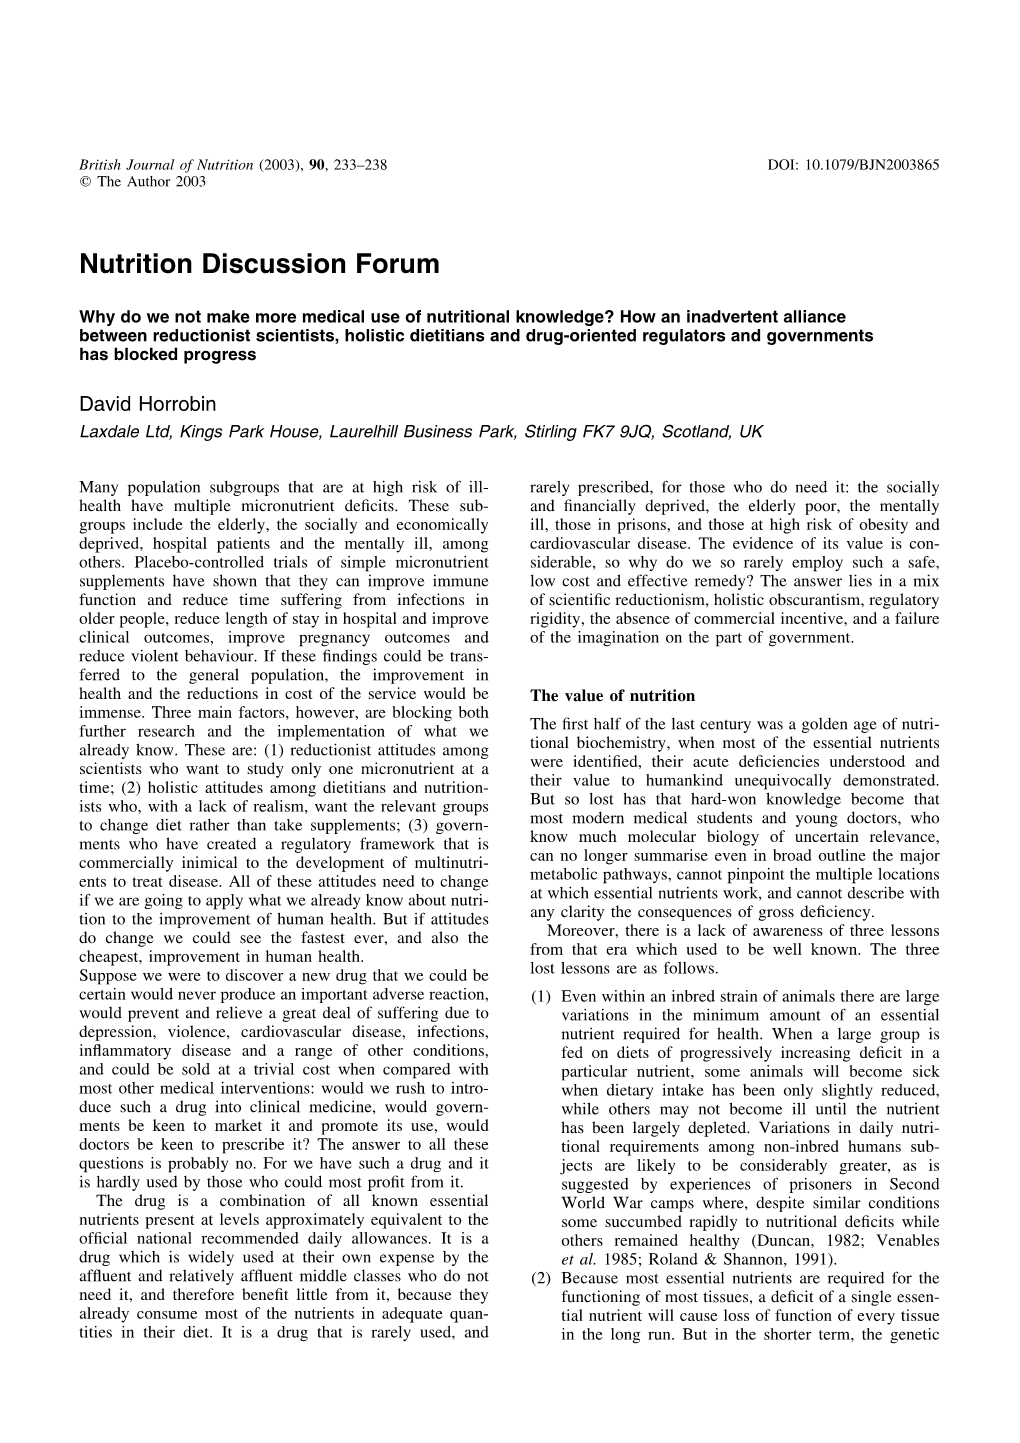 Nutrition Discussion Forum